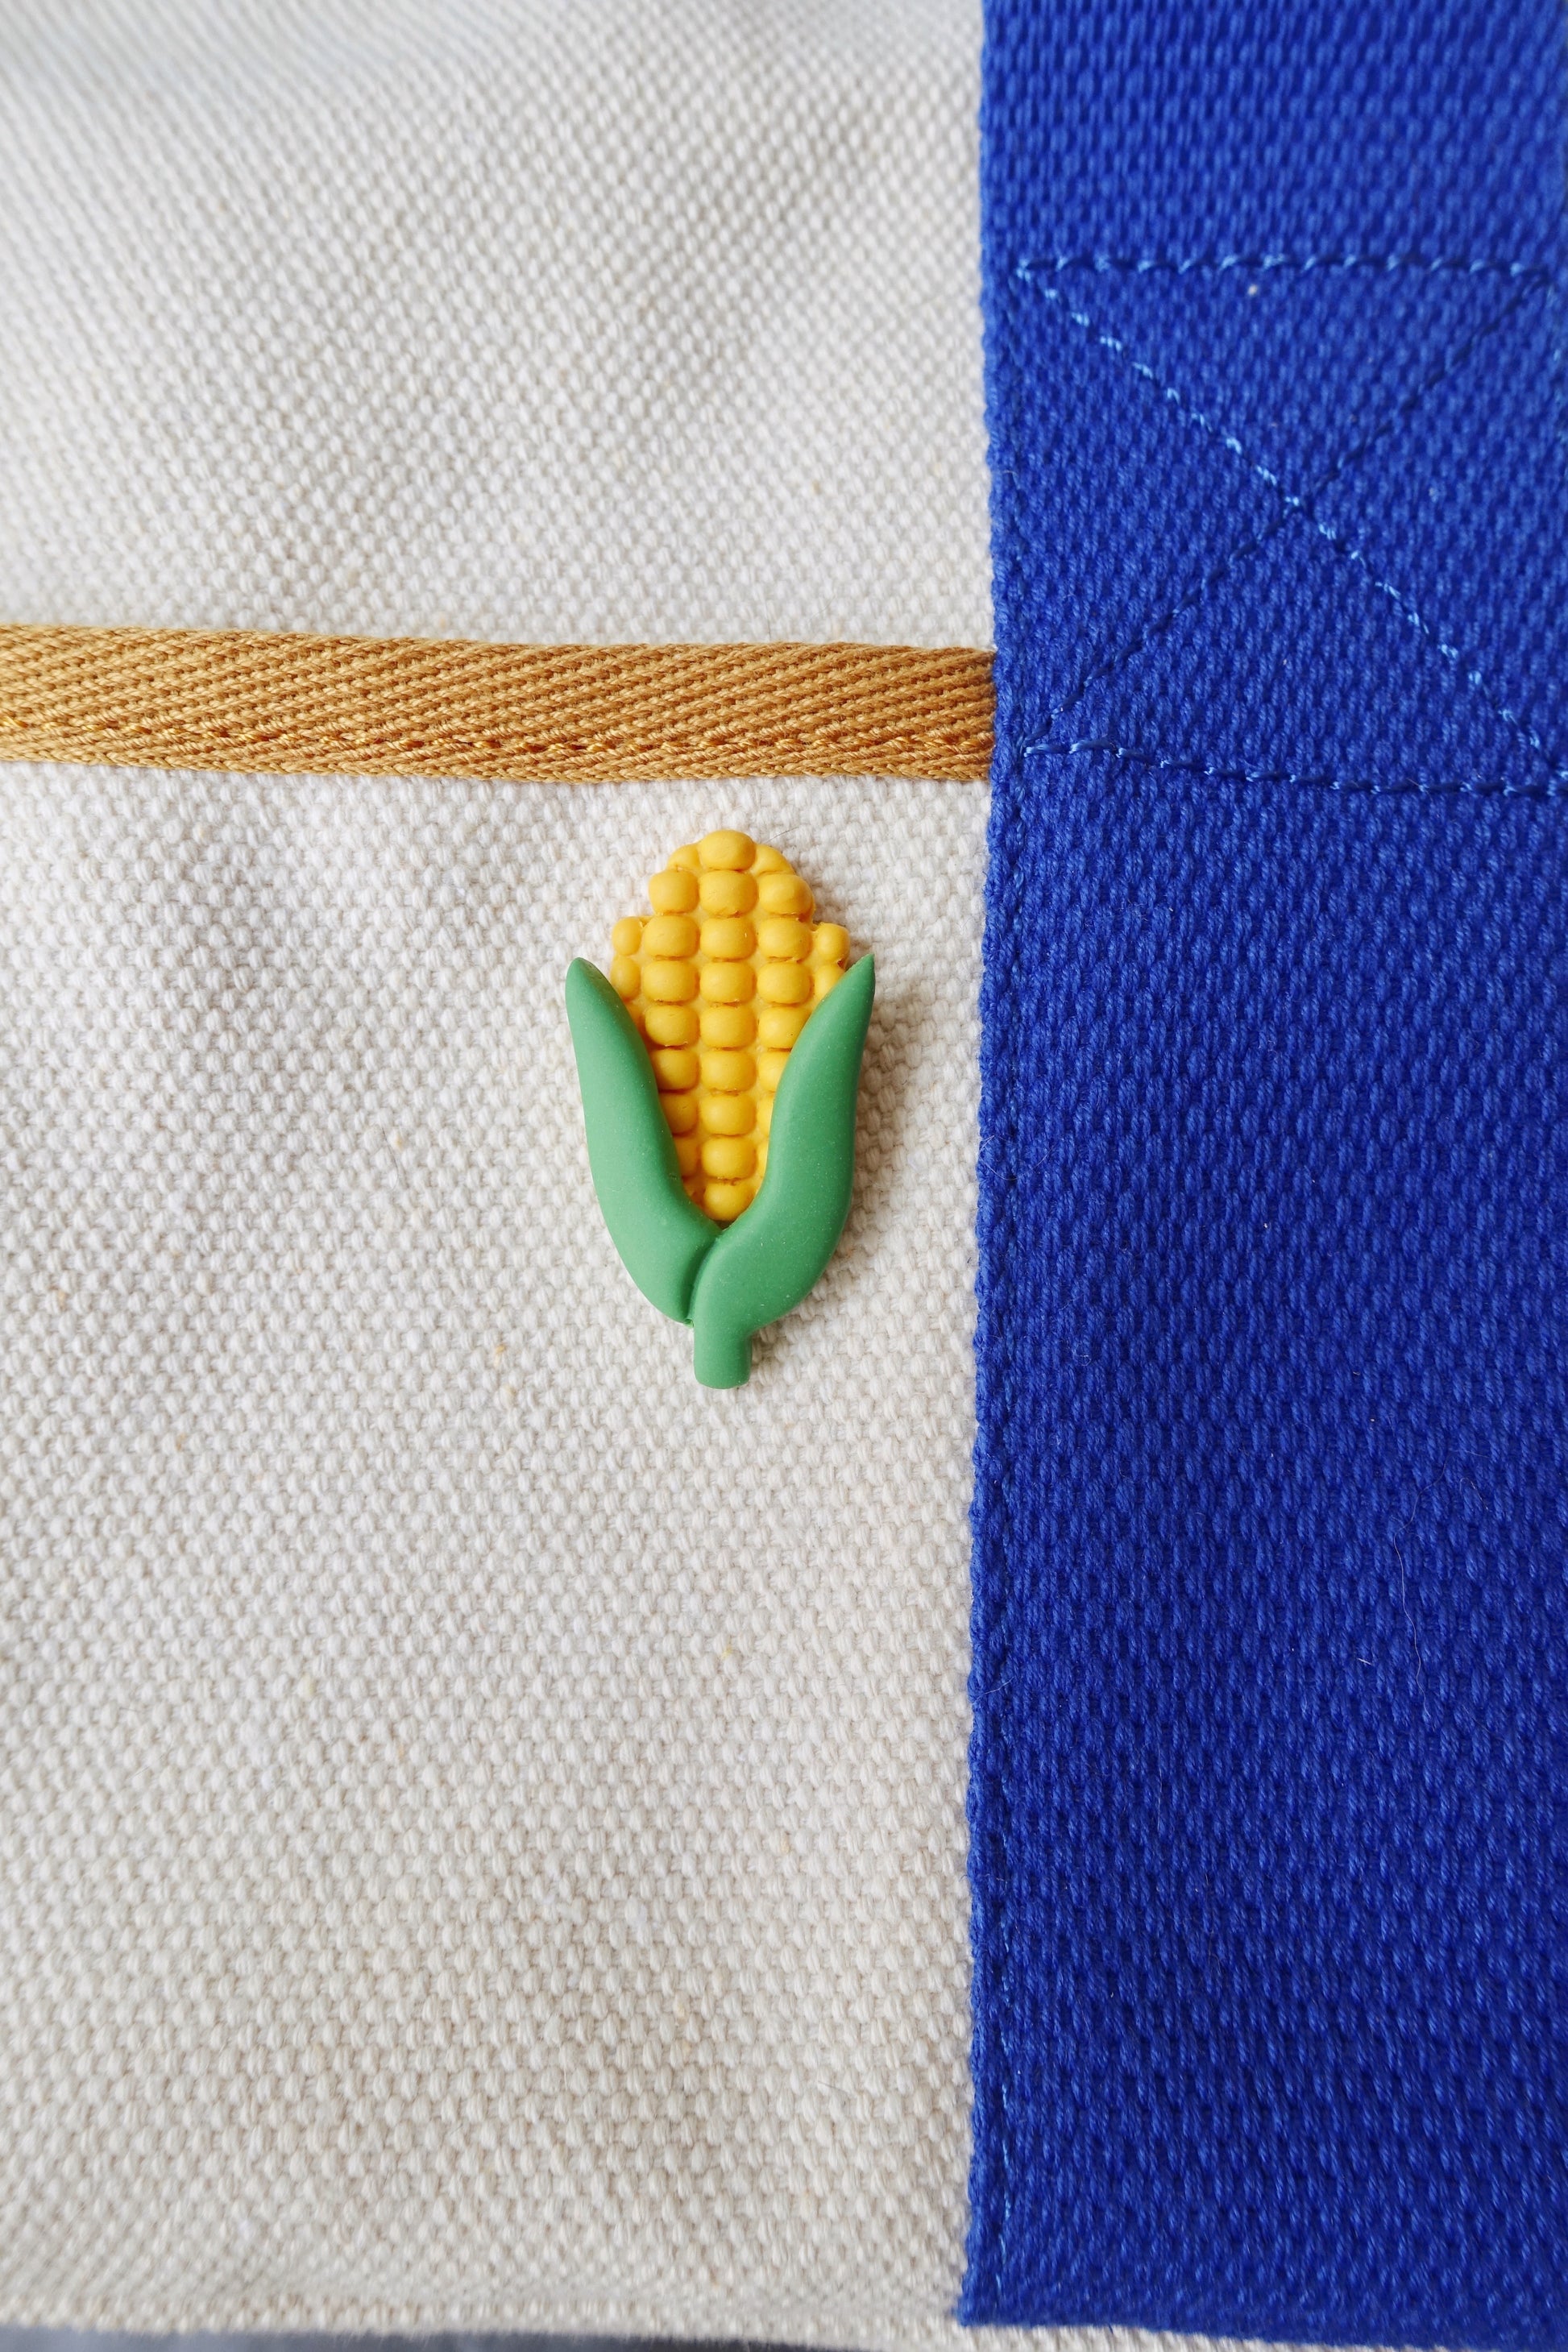 Large Corn Bobbin Analog Company